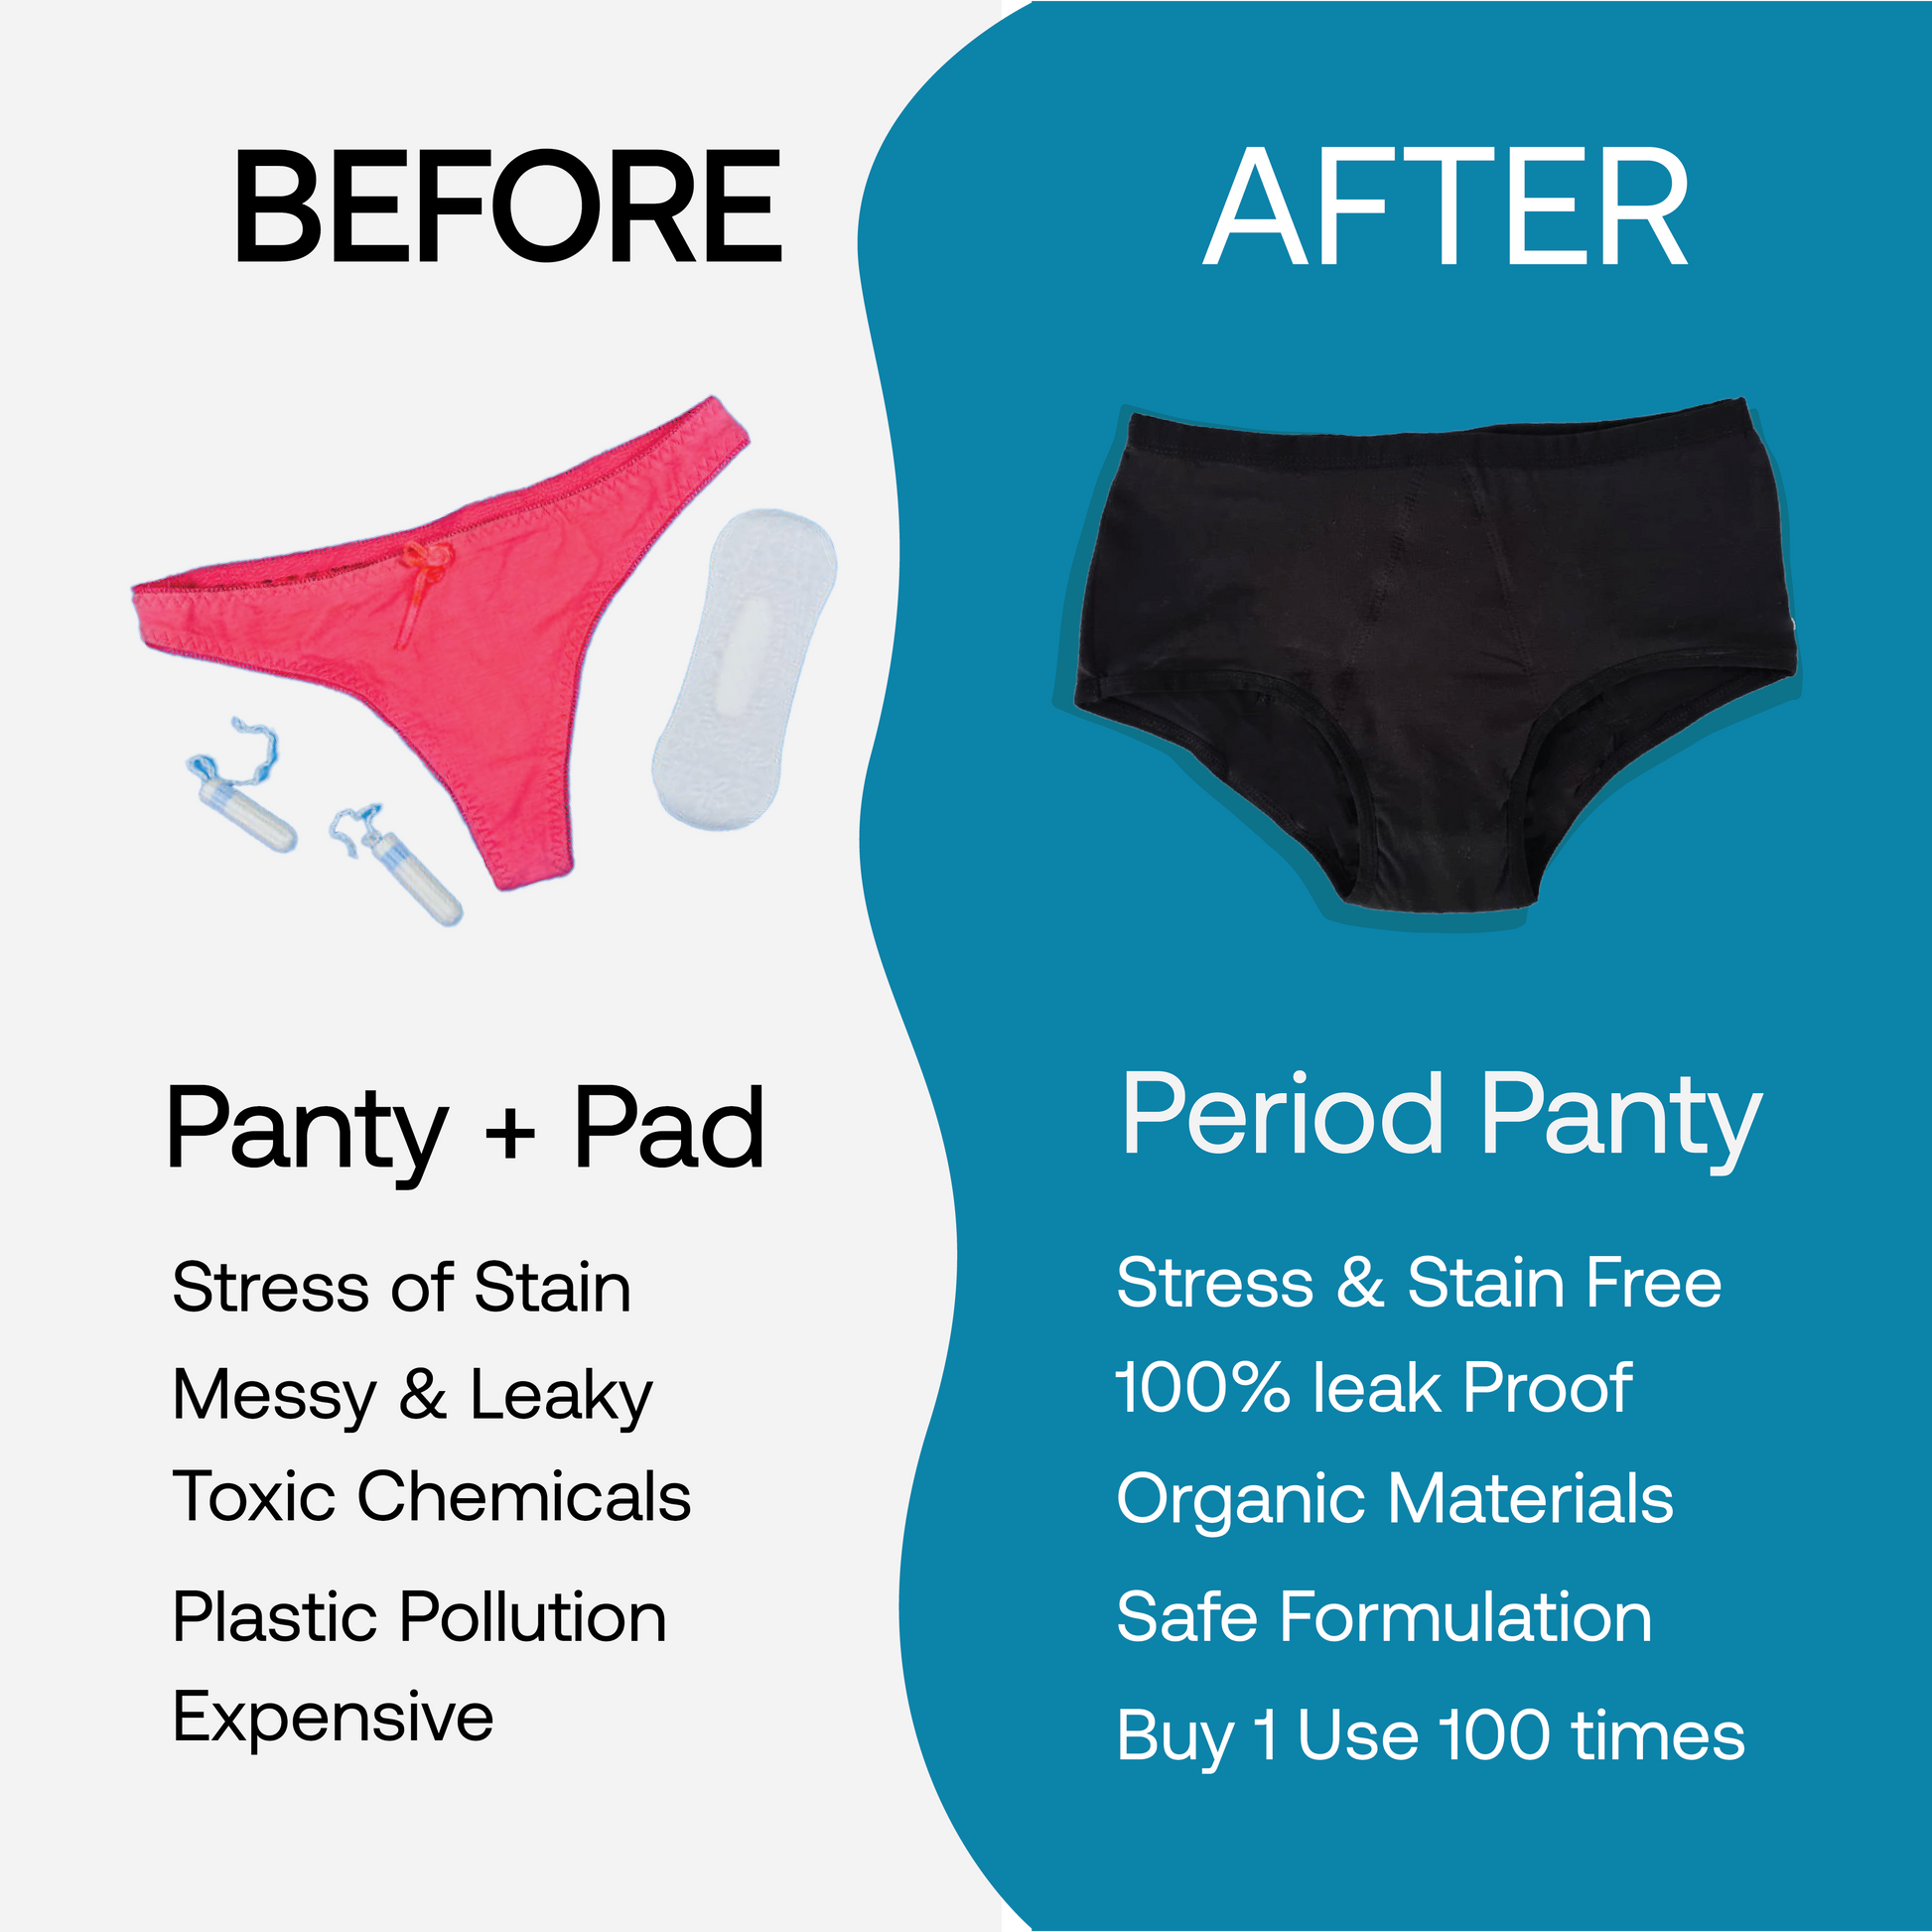 Buy Zorb Reusable Leak Proof Period Panty Online